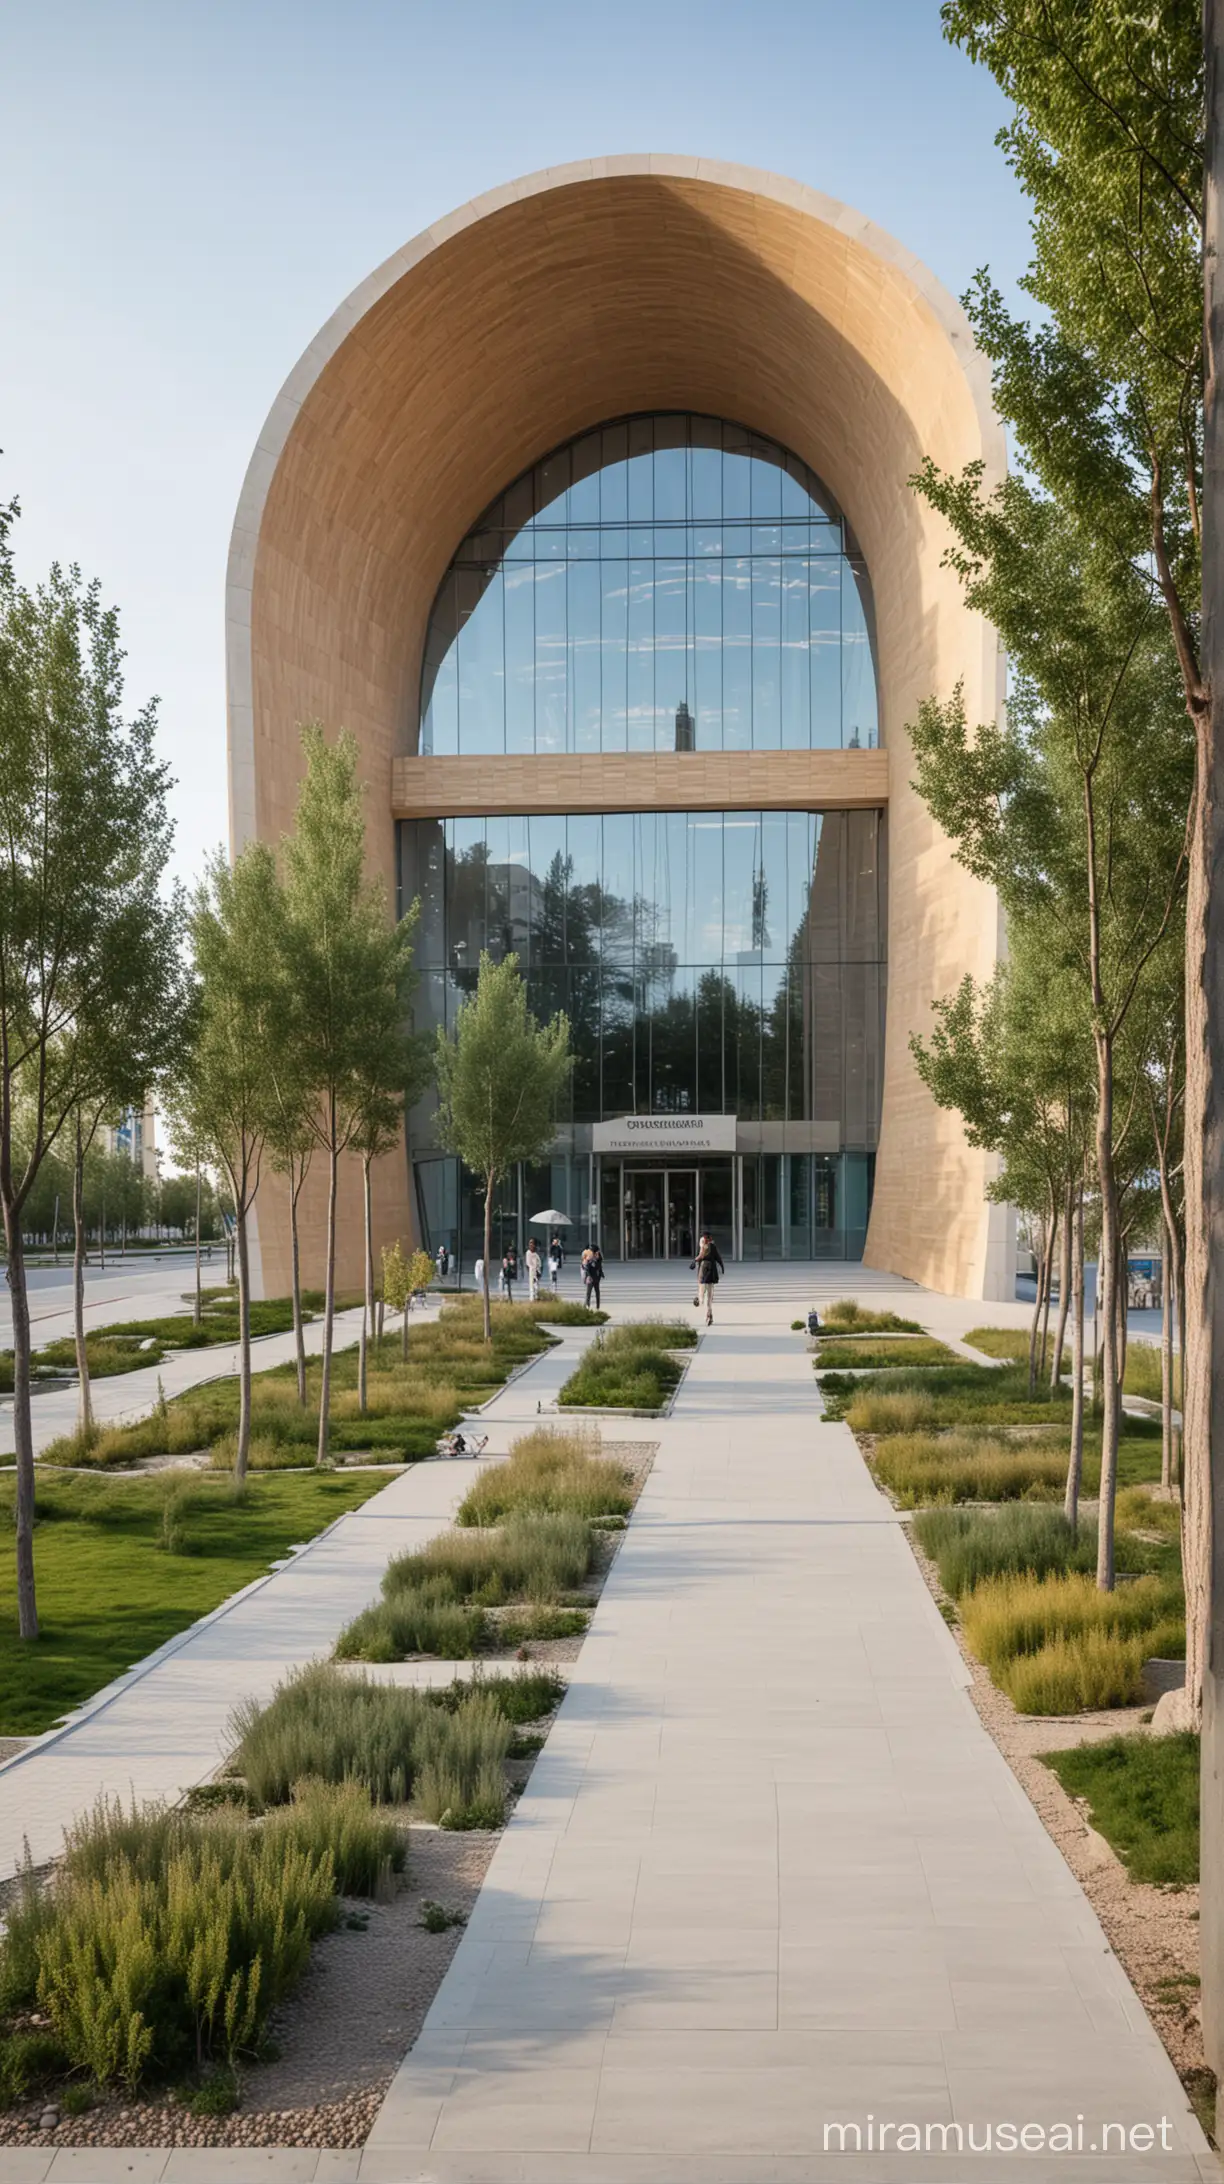 Scenic Pathway to SaxophoneInspired Media Center in Kazakhstan